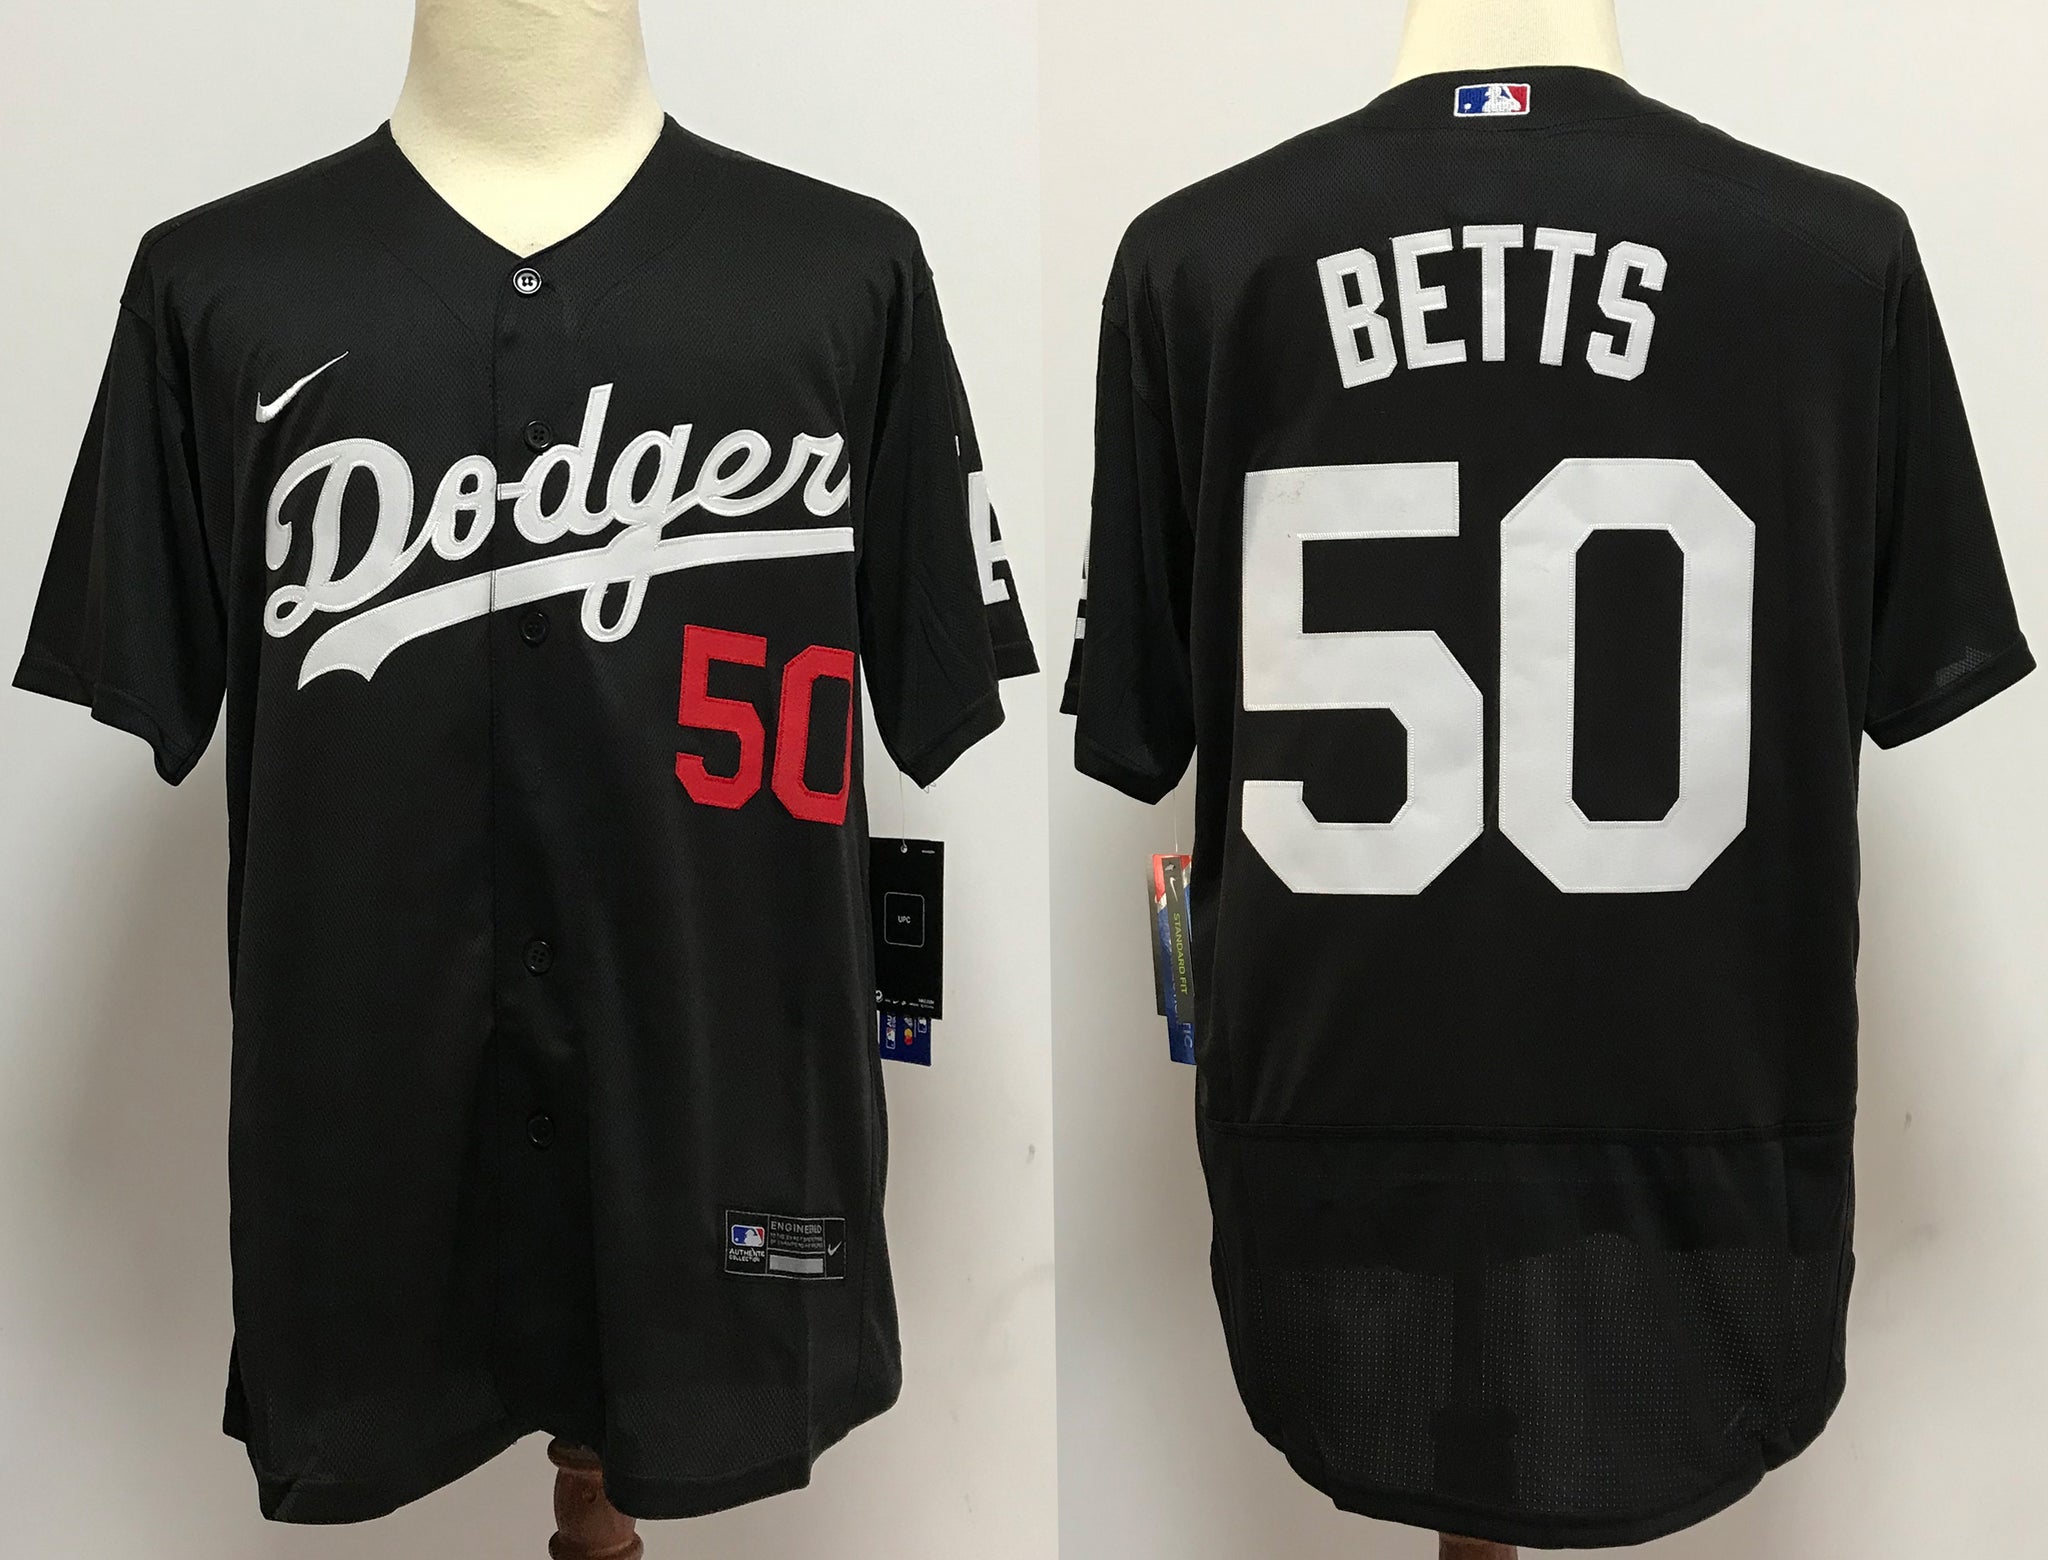 Womens Dodgers Betts #22 black jersey for Sale in Bakersfield, CA